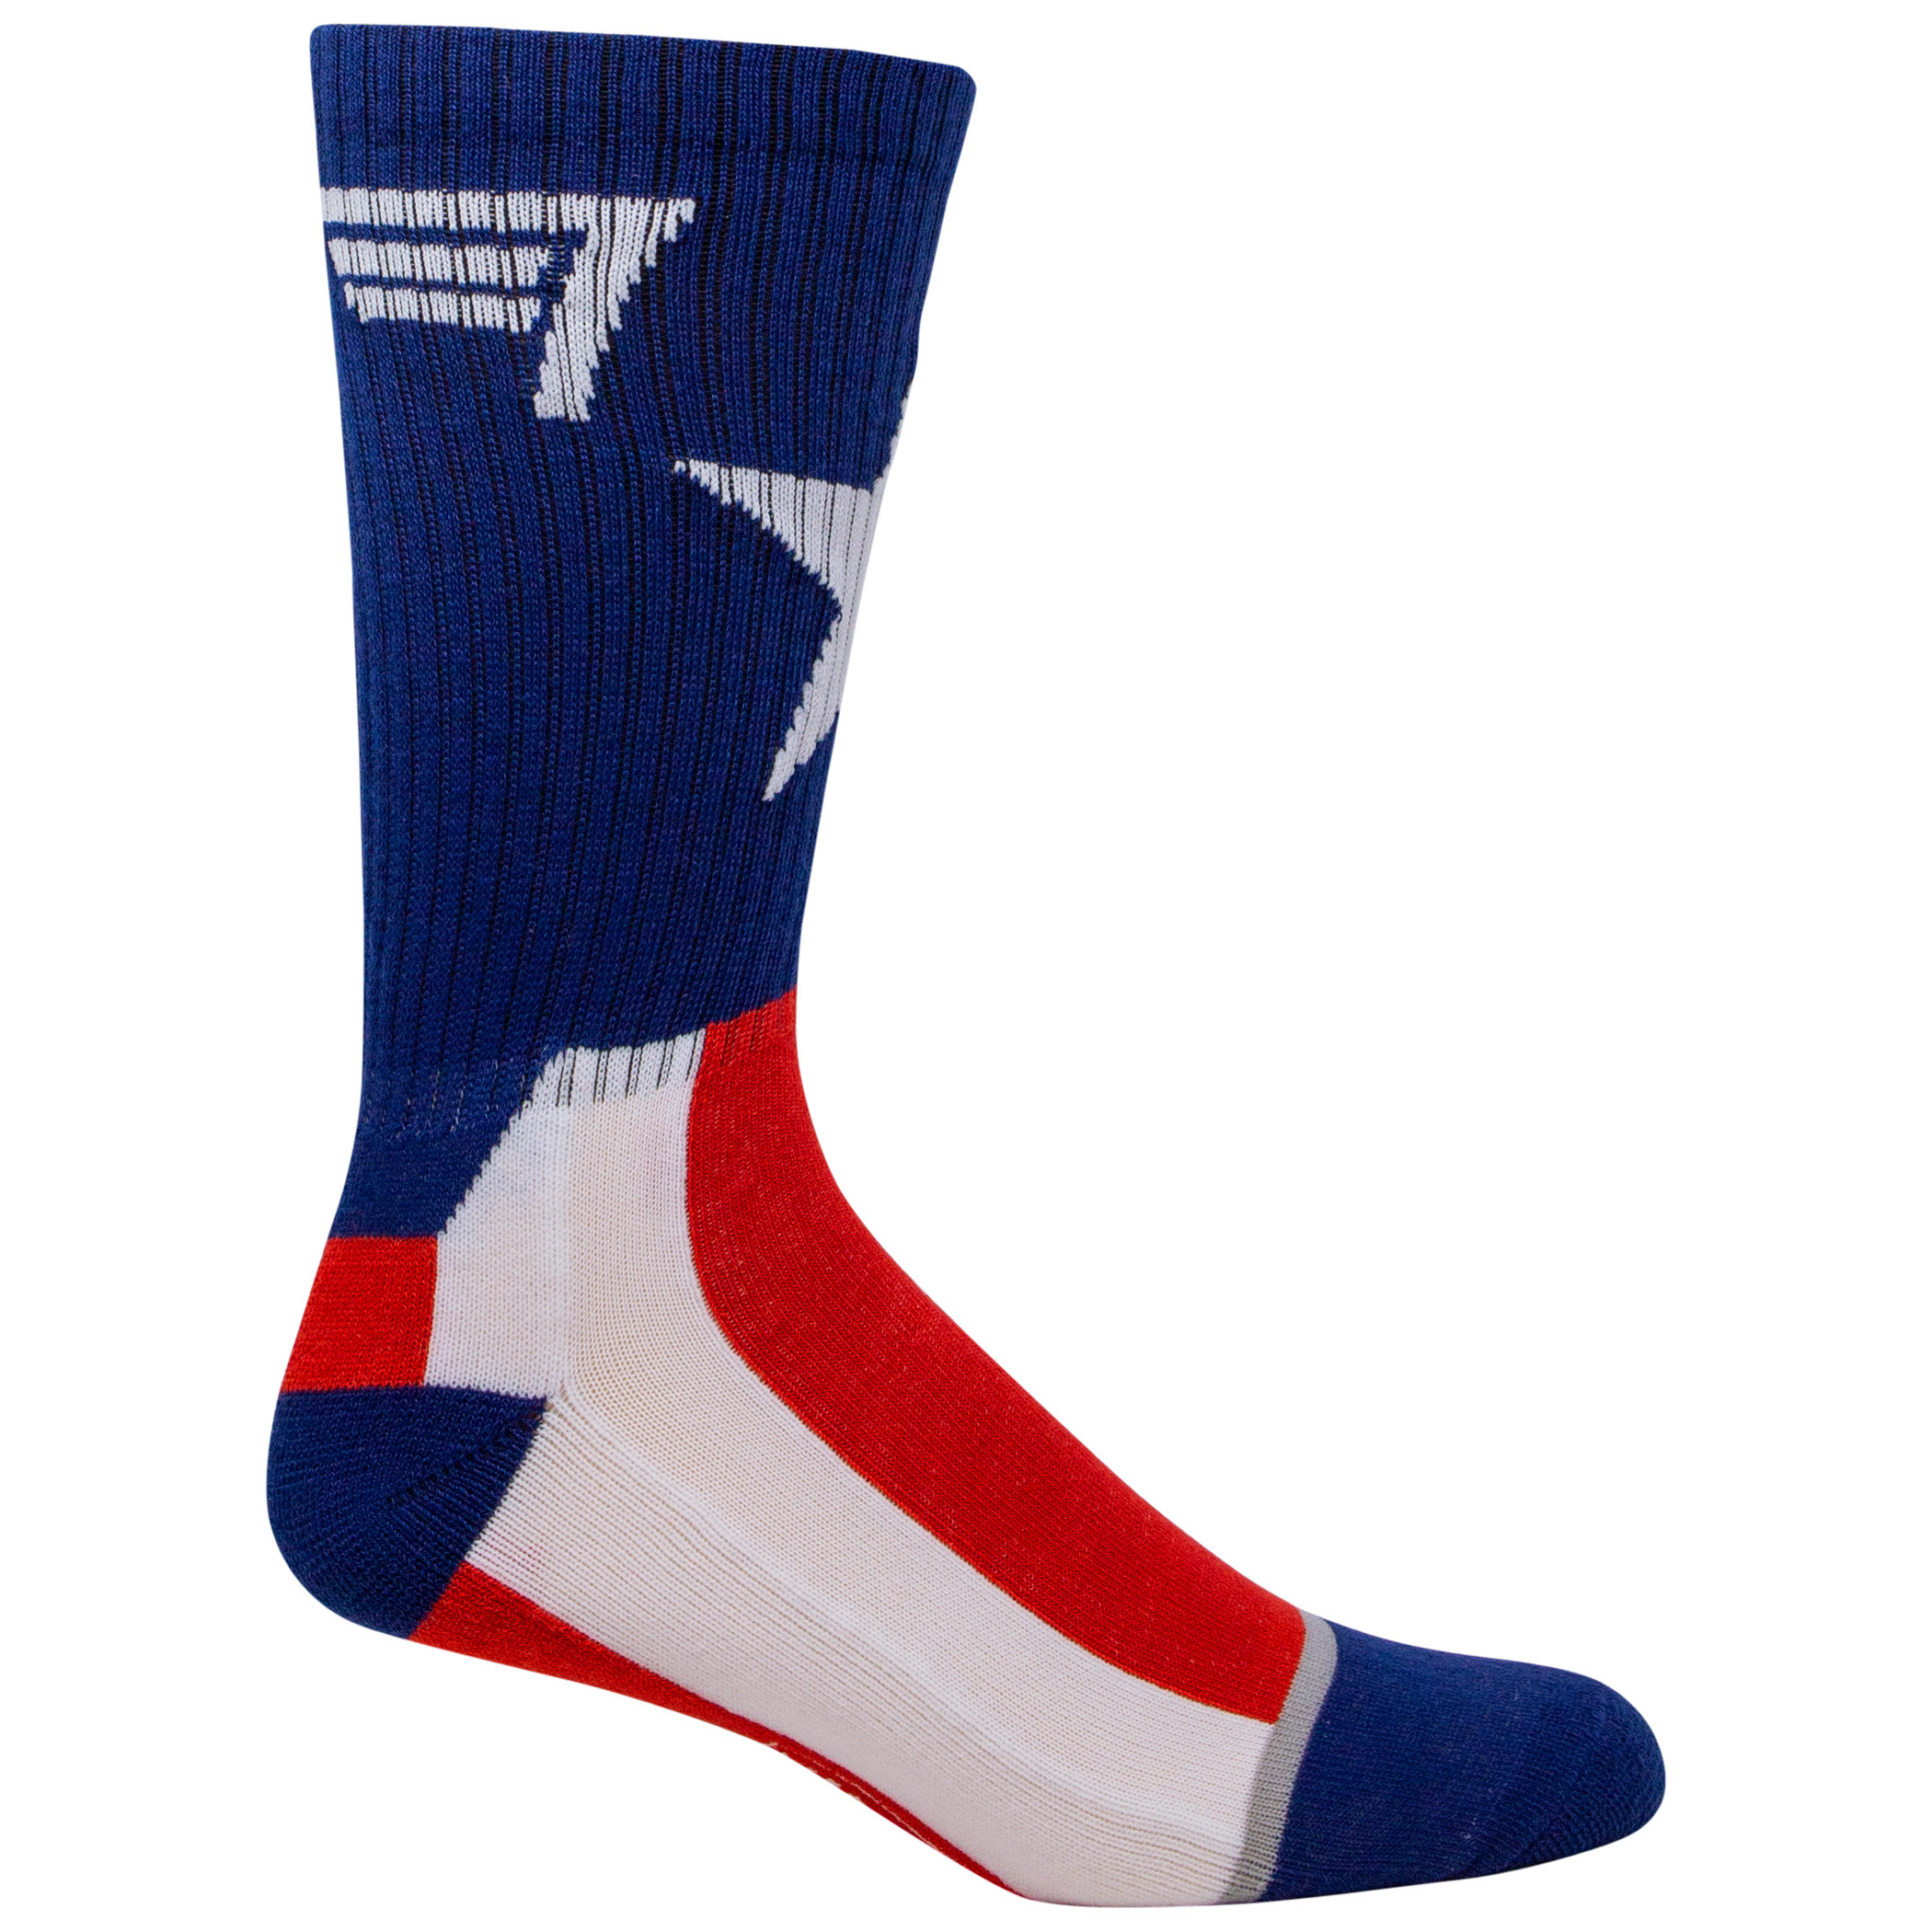 Captain America Suit-Up Athletic Socks